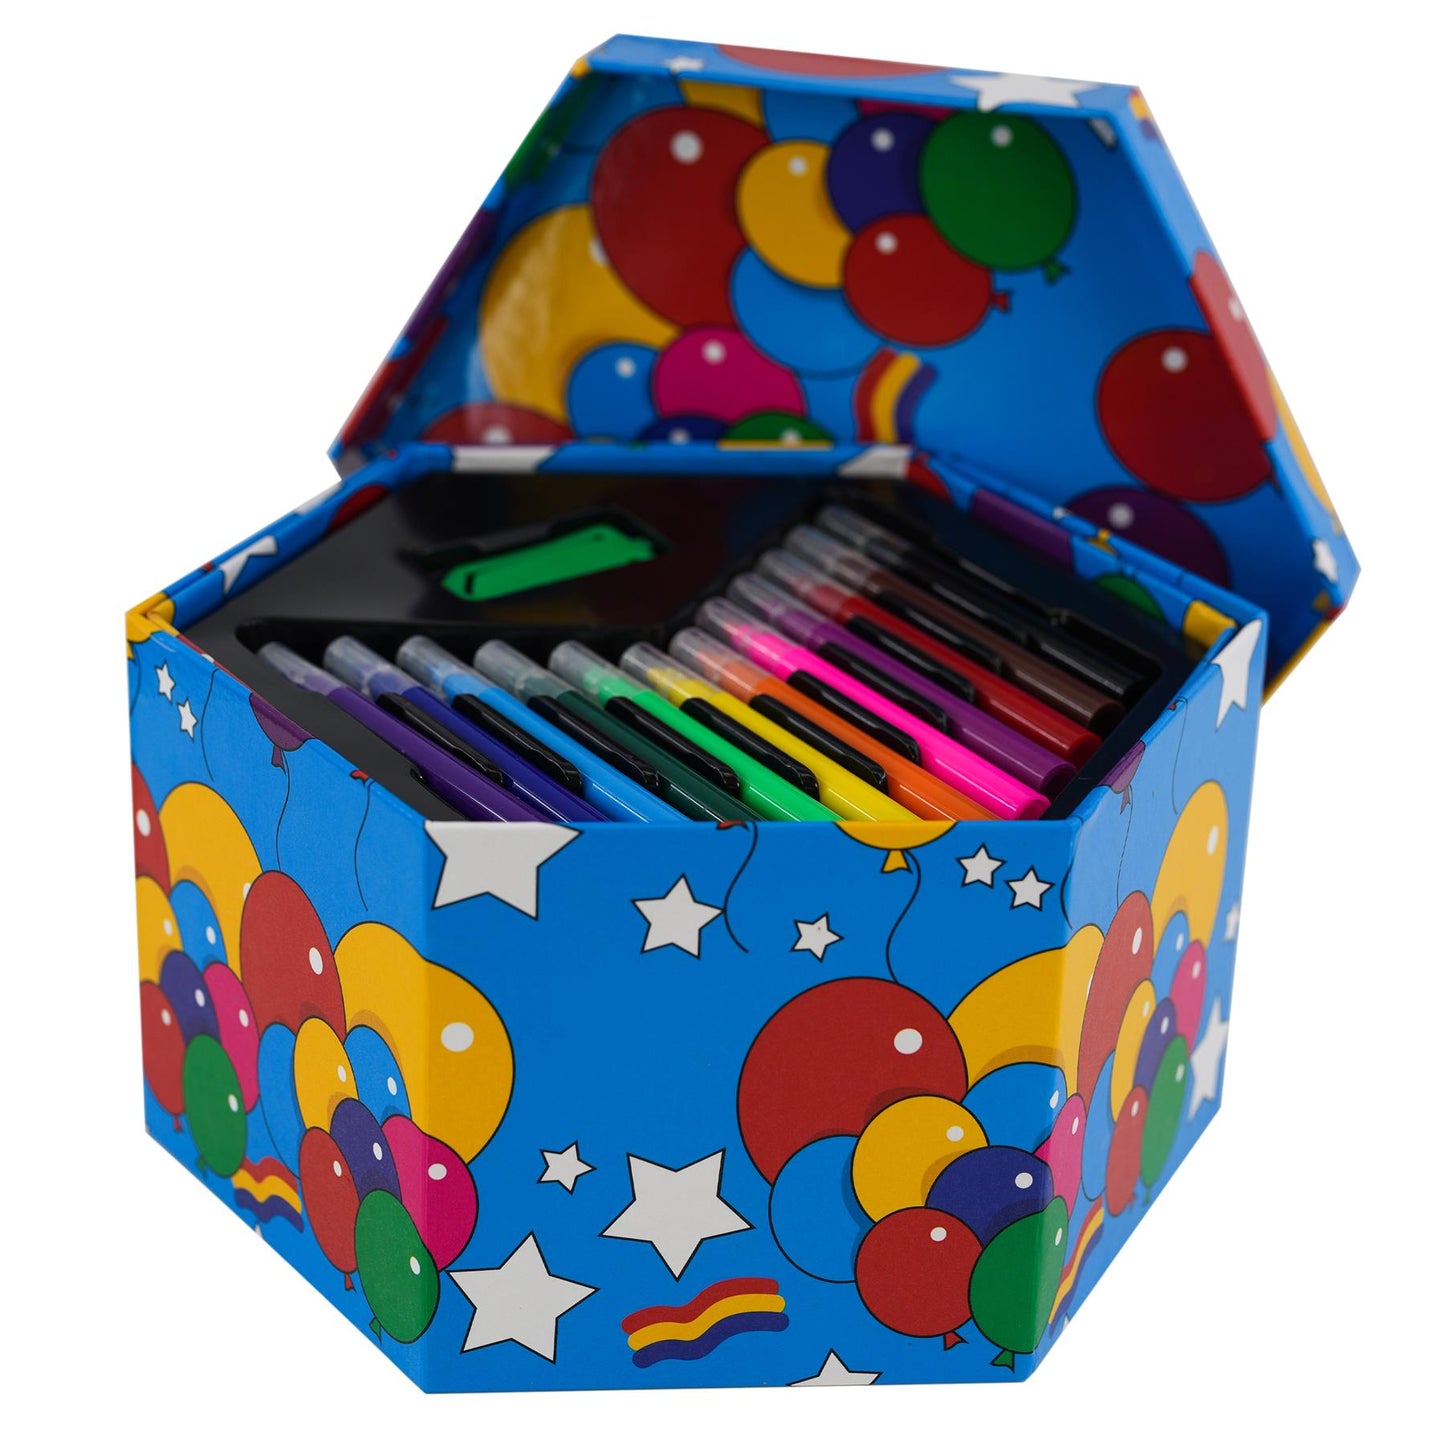 52 PCS Craft Art Artists Set Hexagonal Box by The Magic Toy Shop - UKBuyZone